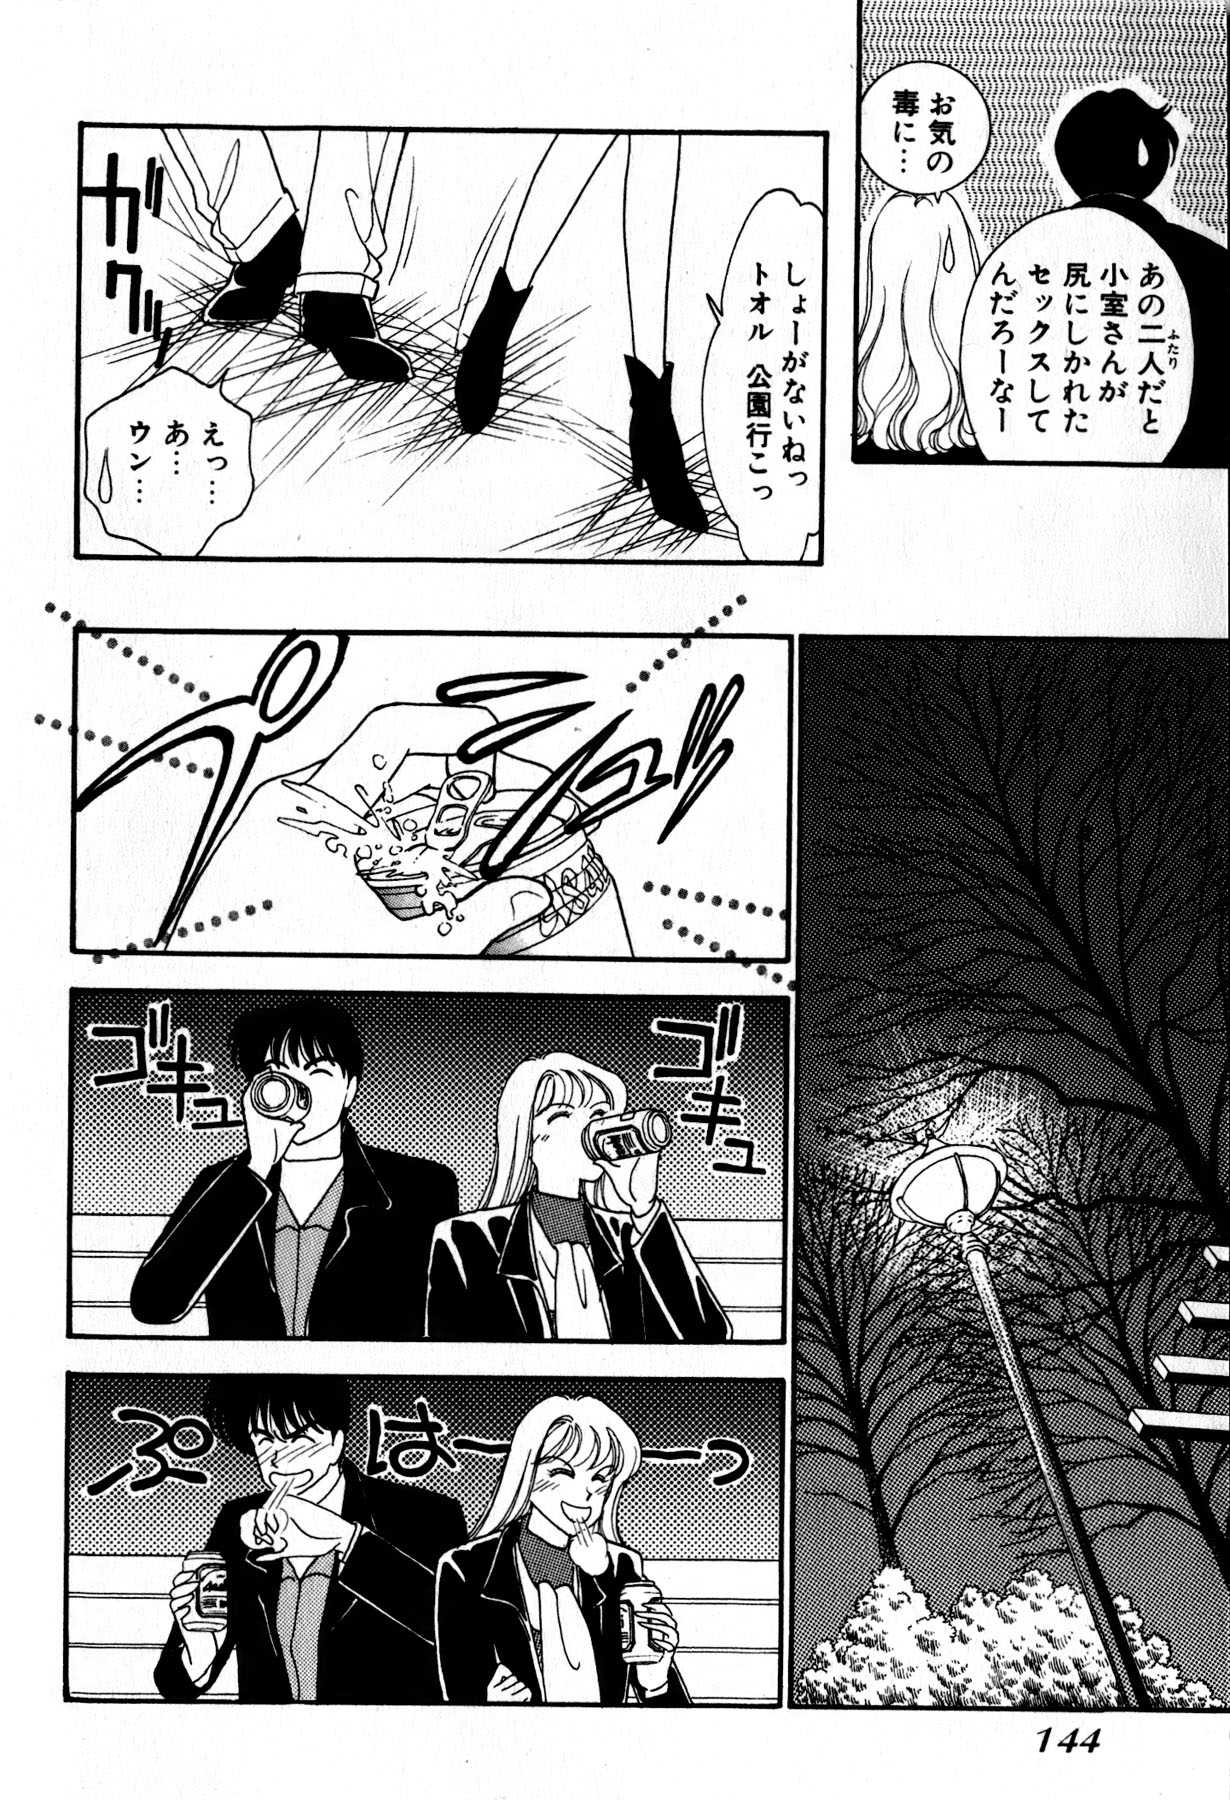 [Arimura Shinobu] Sprite Vol. 8 [有村しのぶ] SPRITE スプライト 第8巻